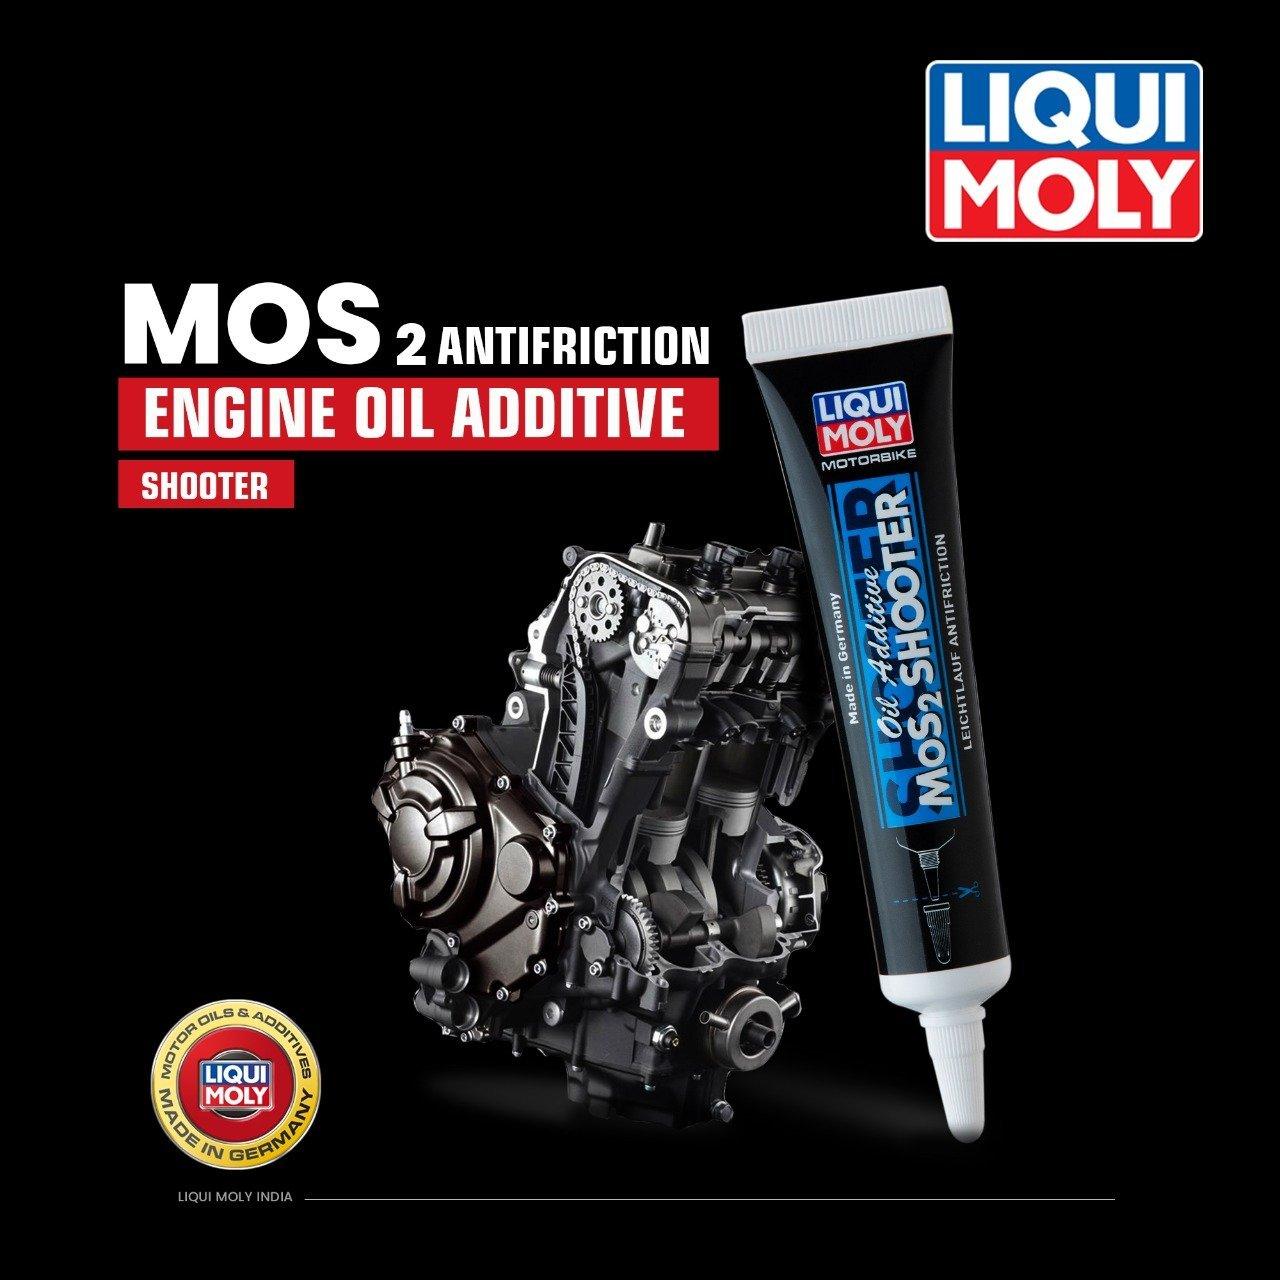 Liqui Moly Mos2 Oil additive shooter 20 ml - Moto Modz